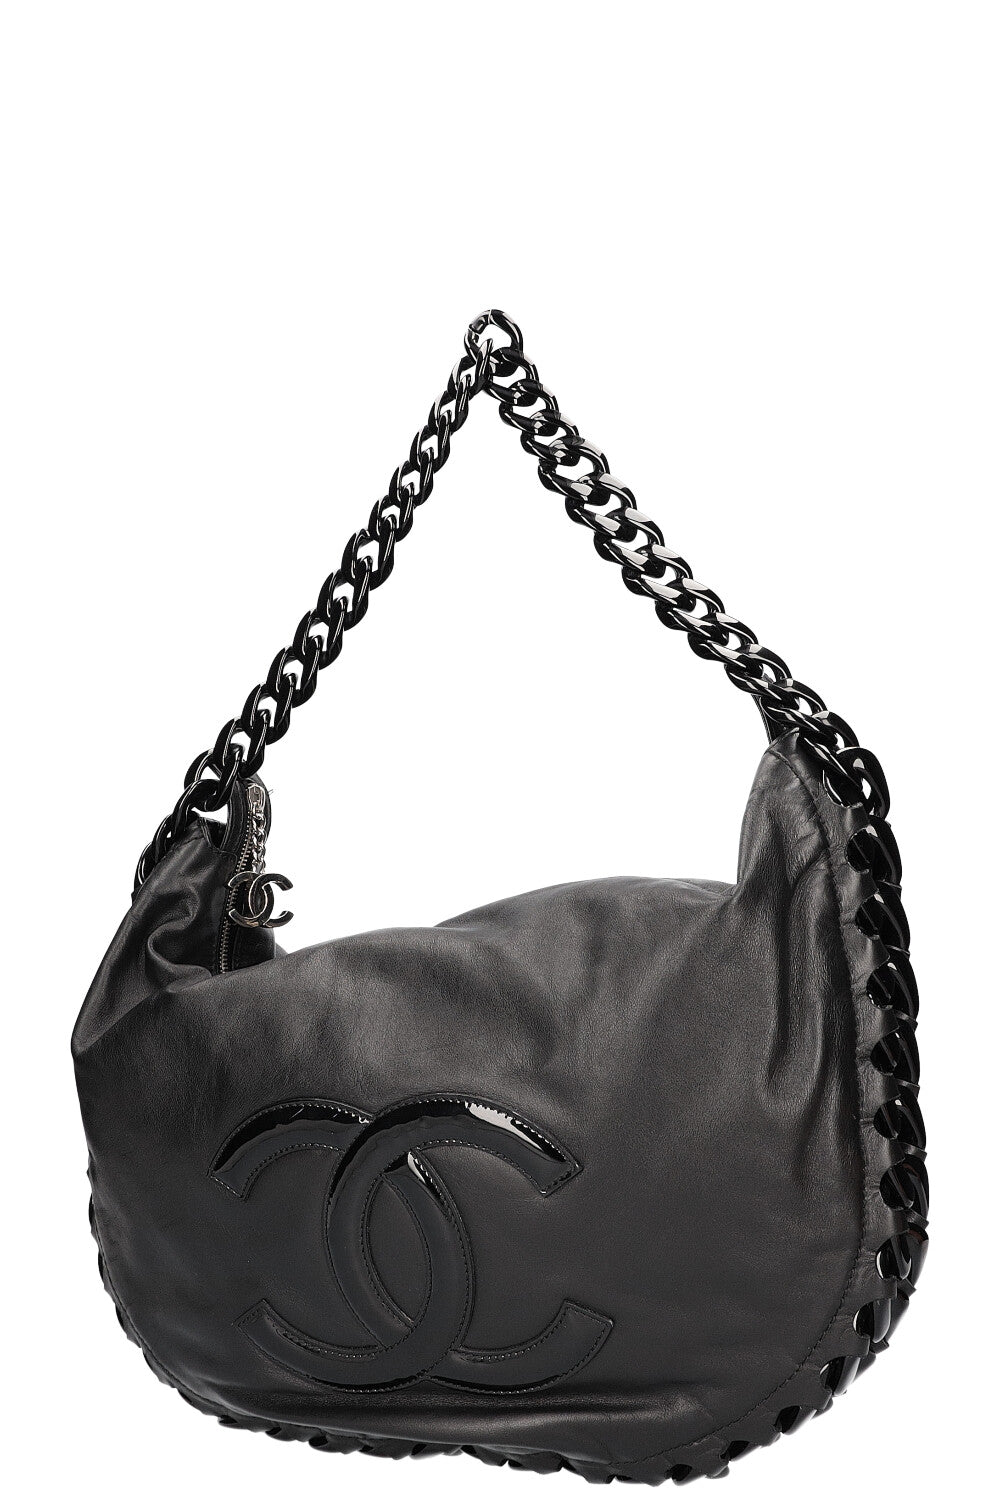 CHANEL Chain Hobo Bag Black